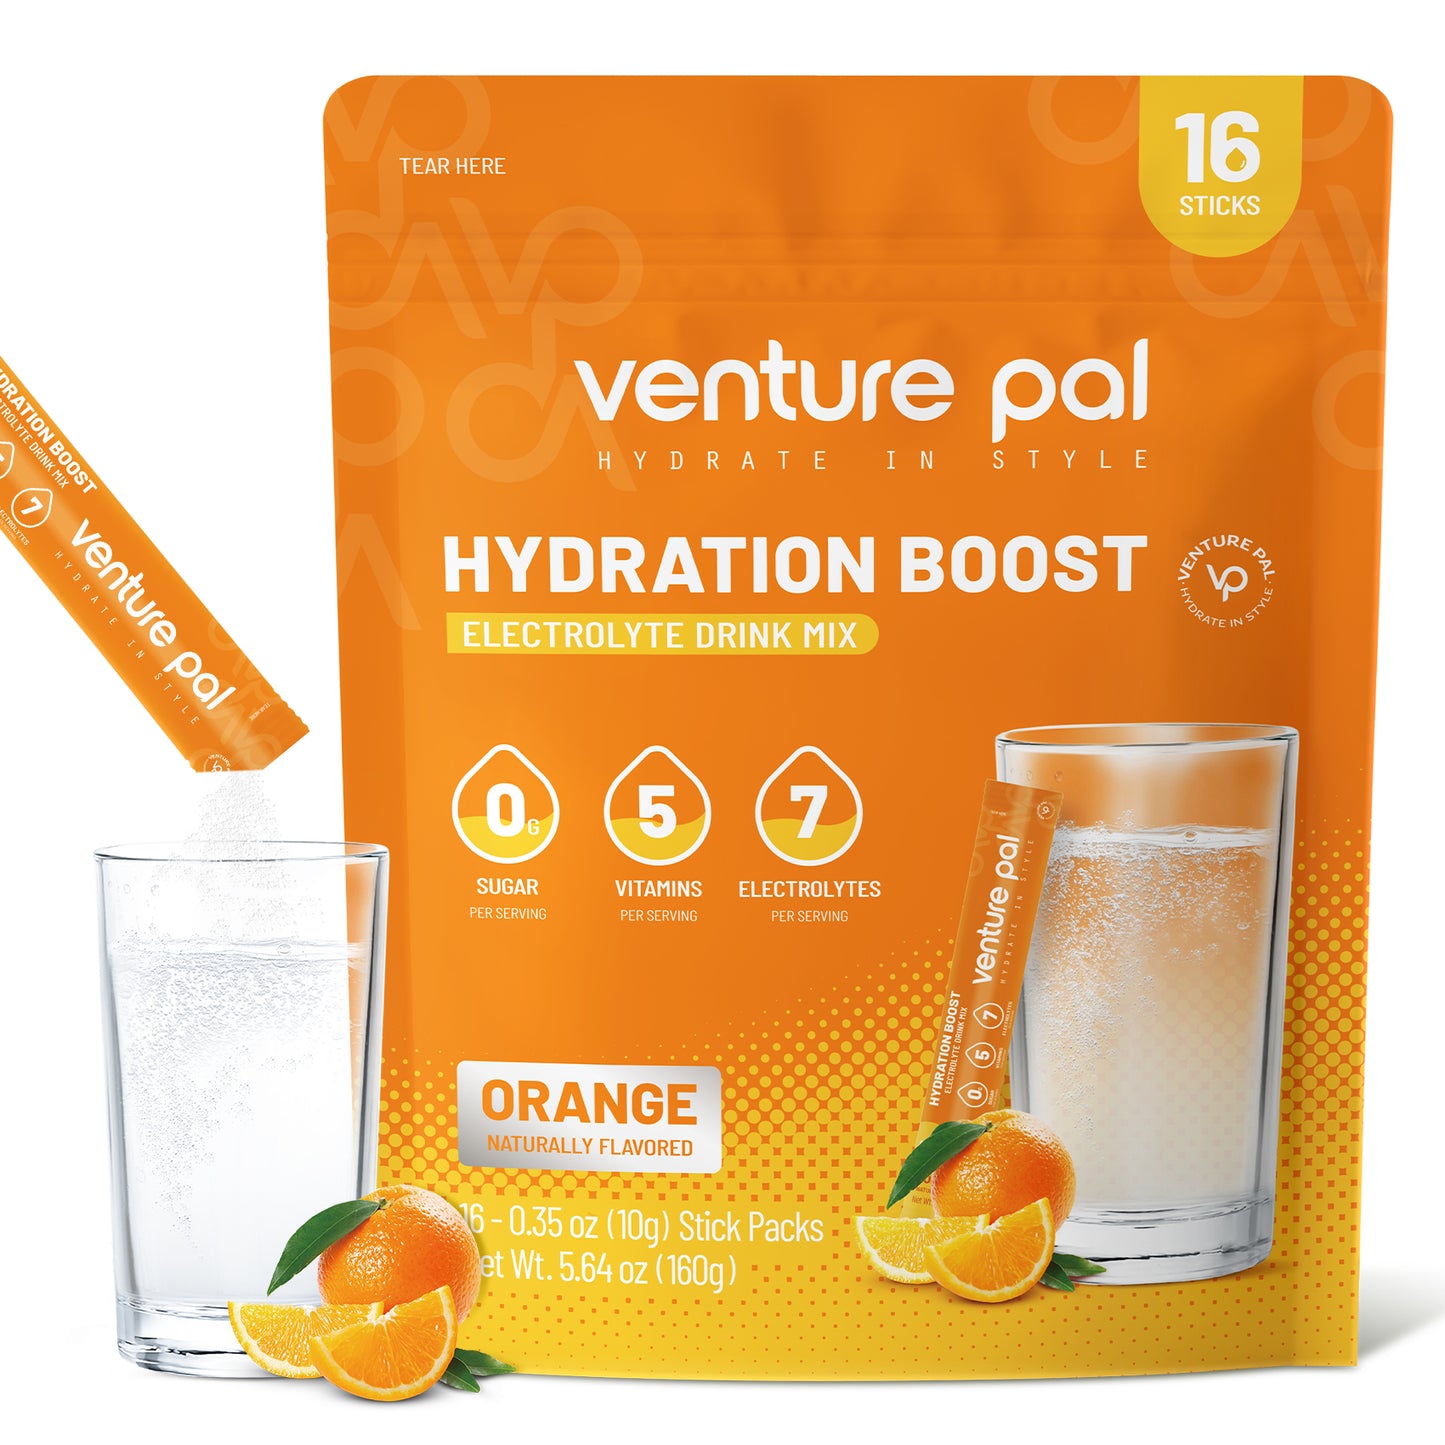 Venture Pal 40L Hiking Backpack and Zero Sugar Electrolyte Powder Orange Flavor